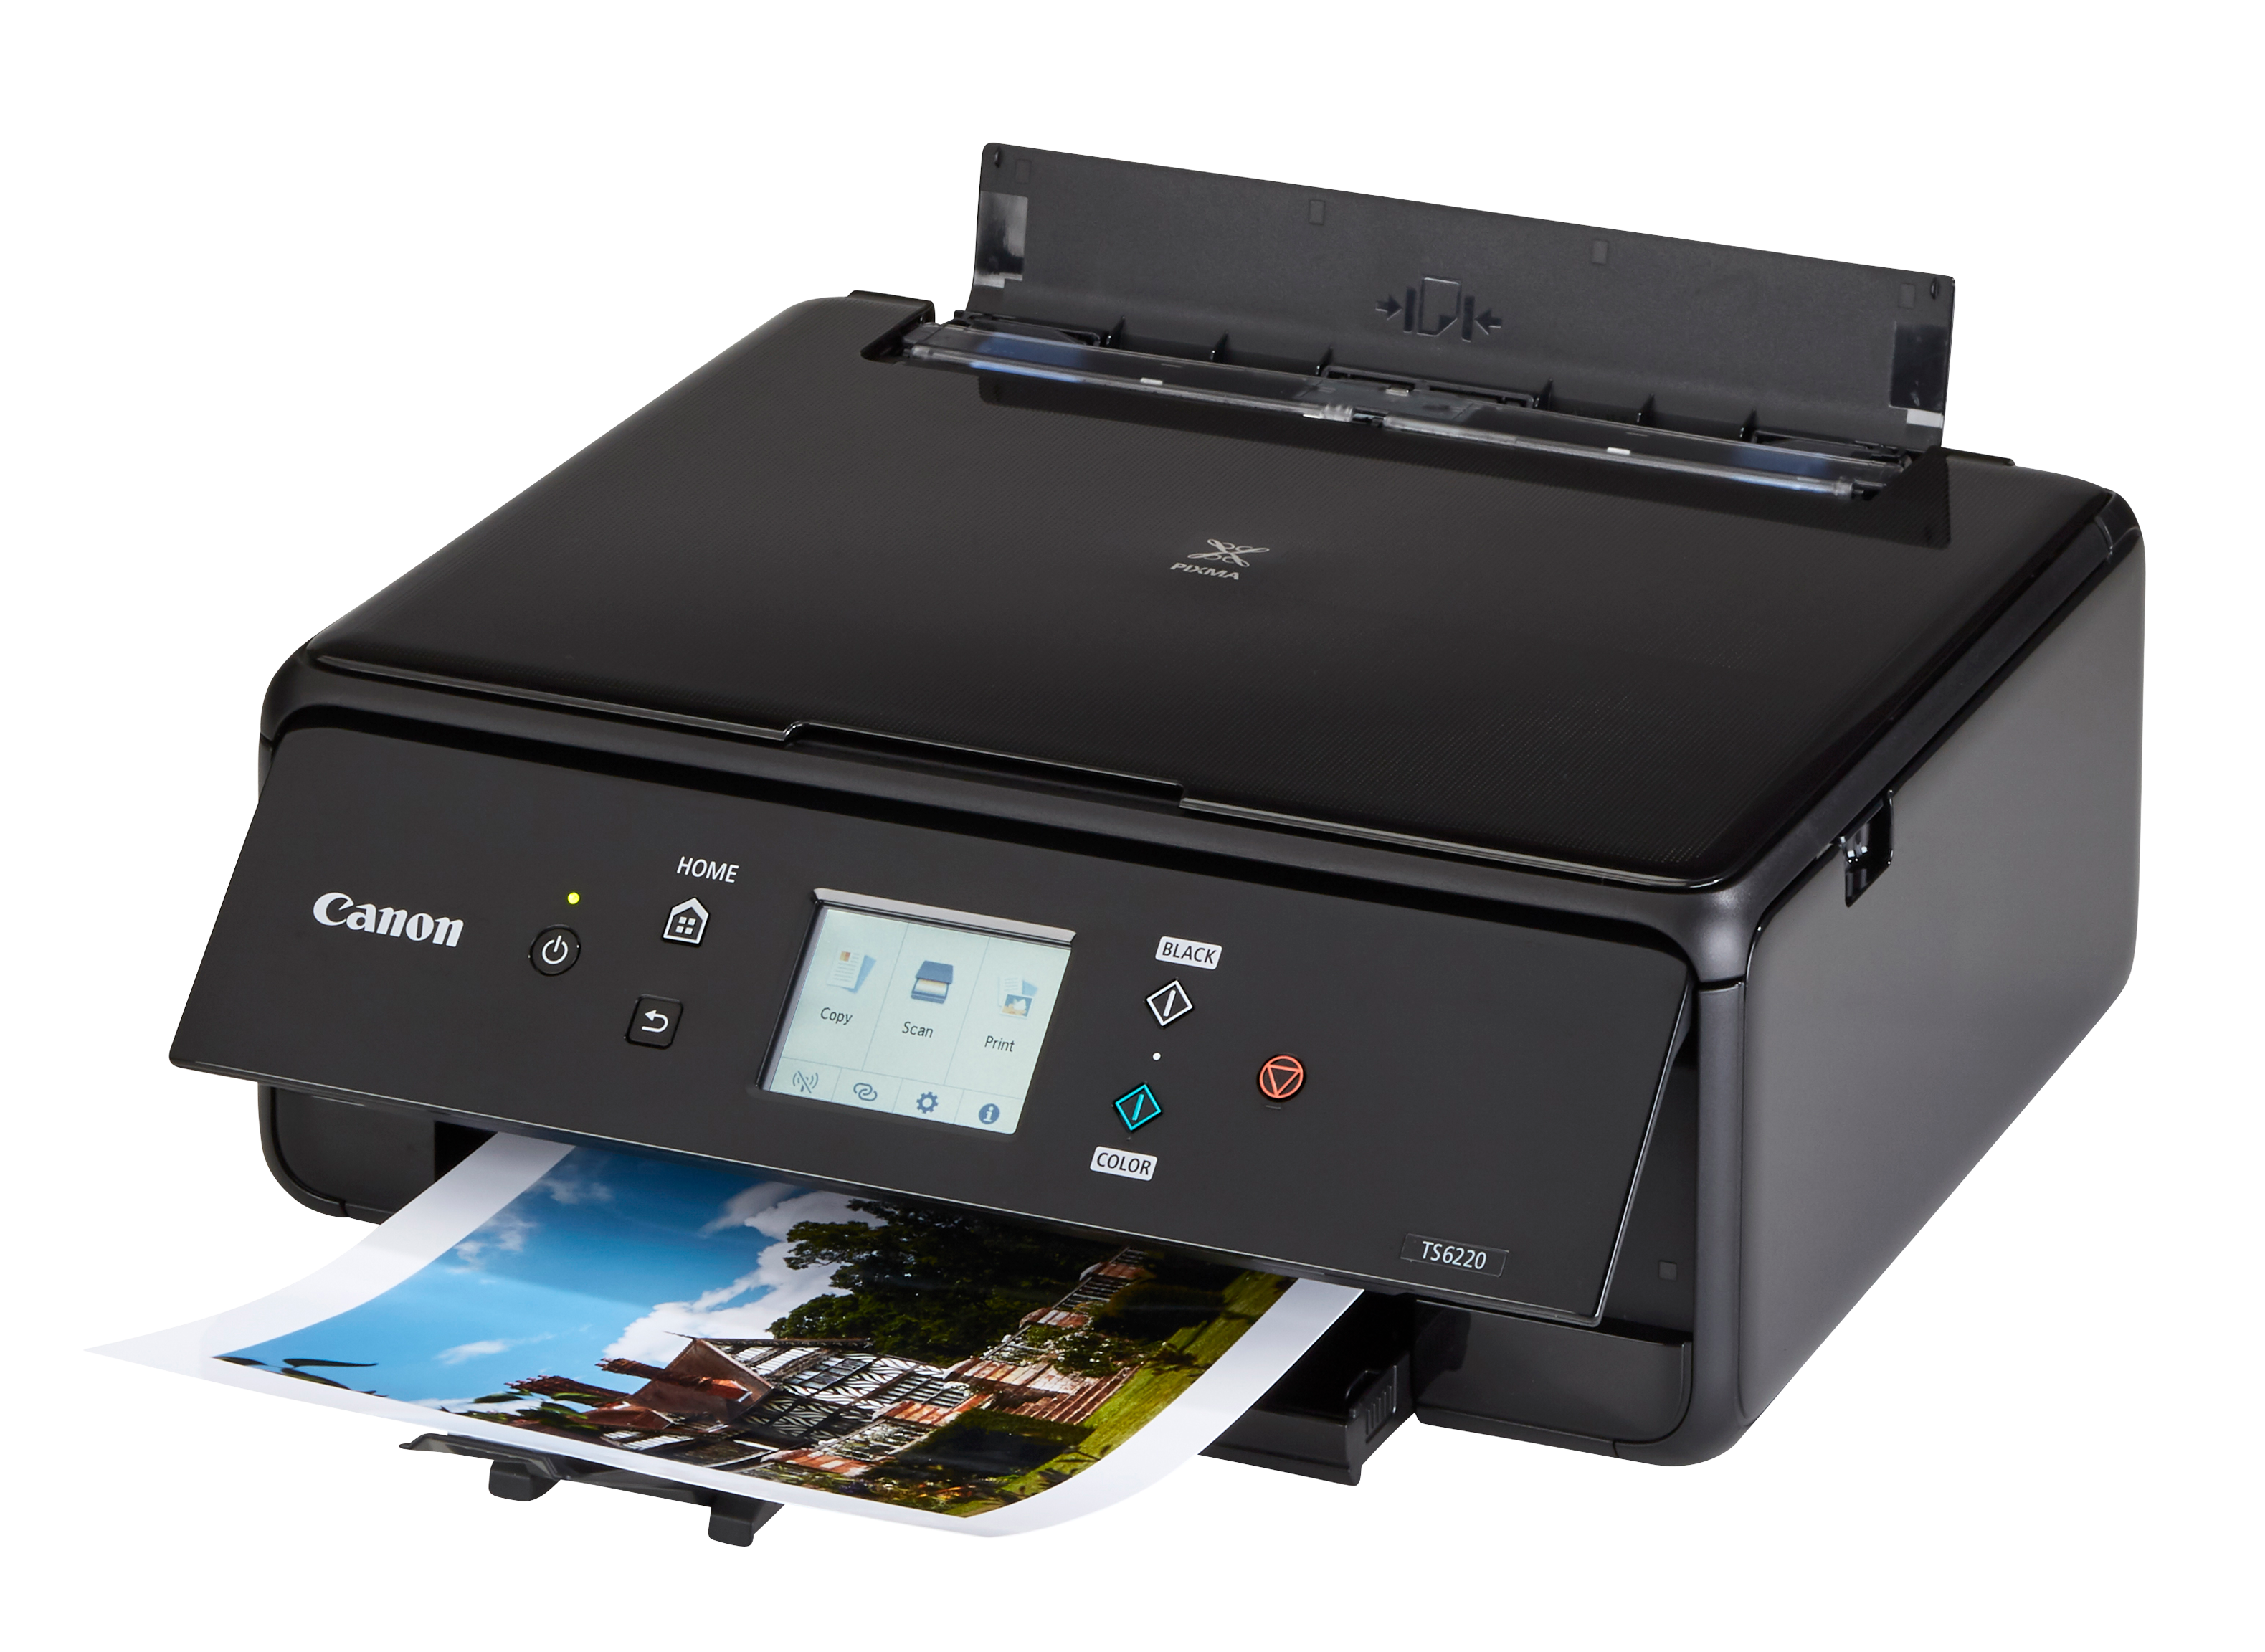 abstract Toezicht houden Illustreren Canon PIXMA TS6220 Printer Review - Consumer Reports